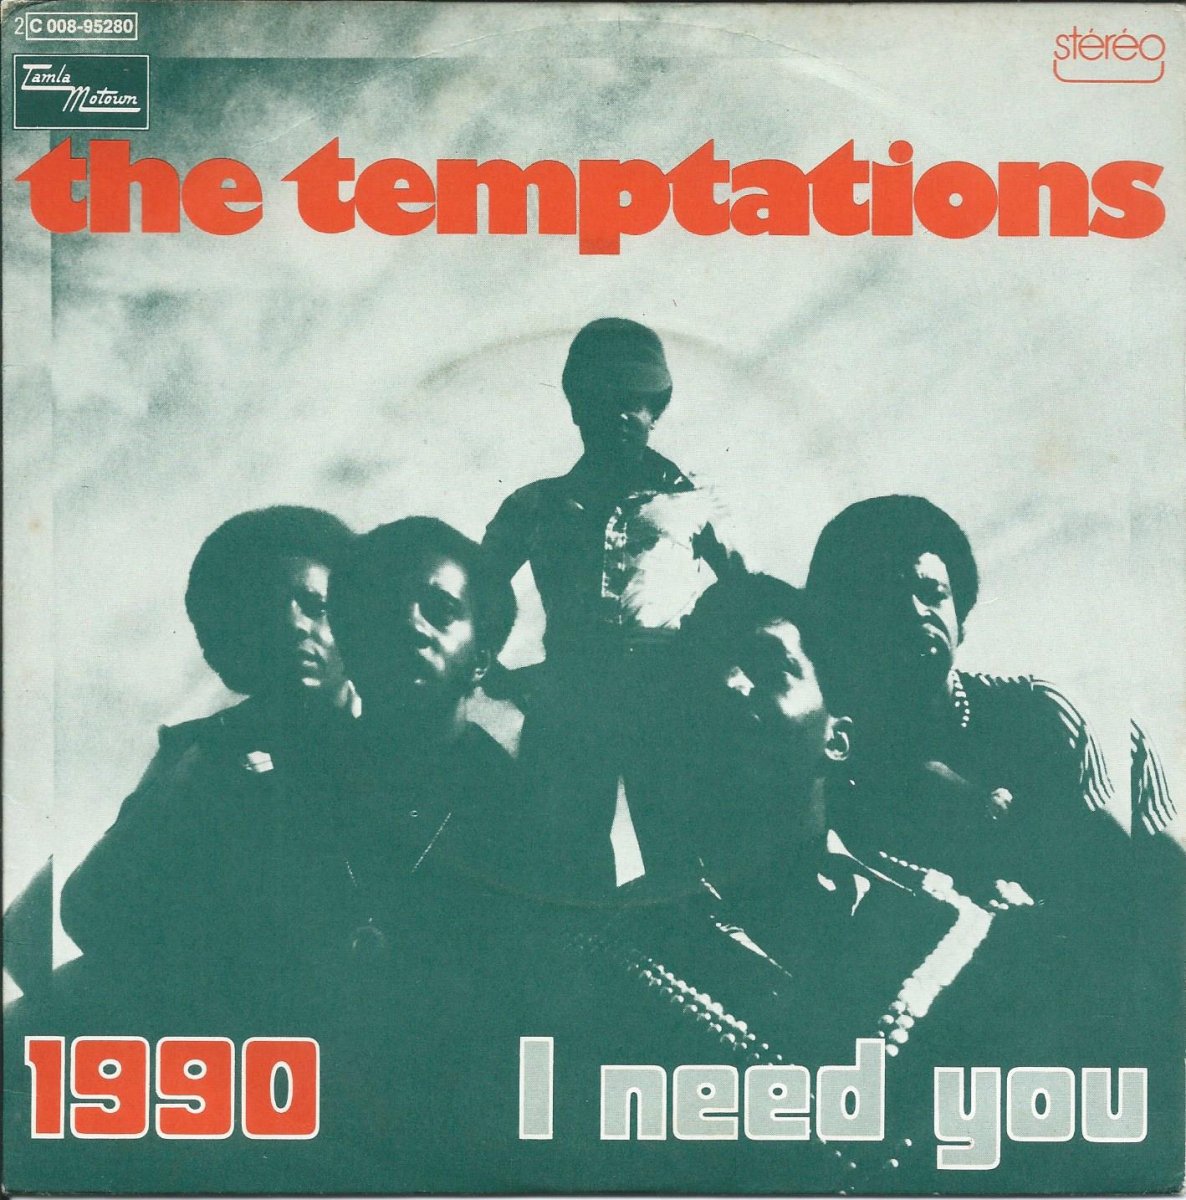 THE TEMPTATIONS / 1990 / I NEED YOU (7